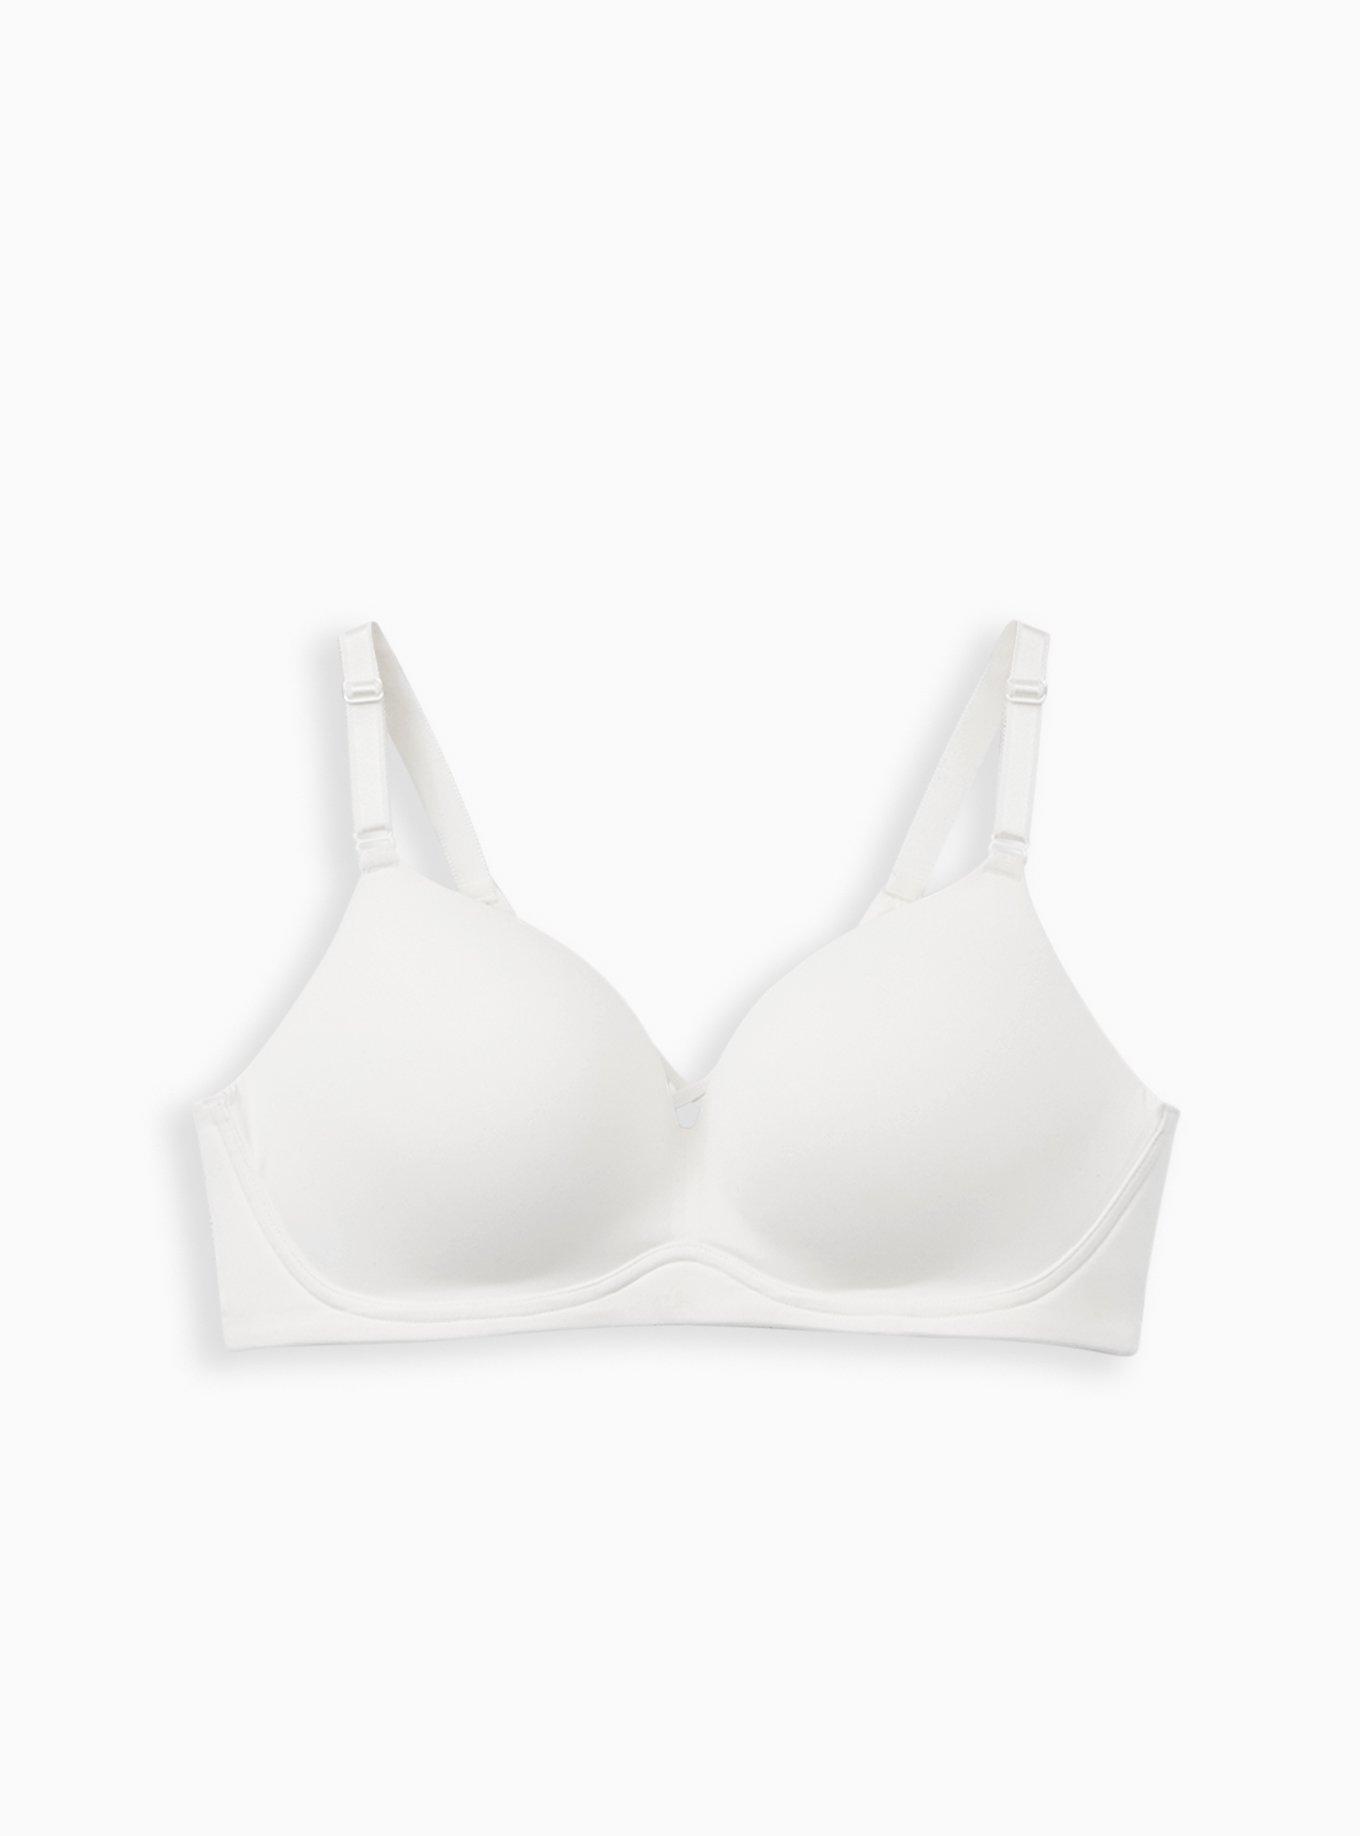 Torrid white push up bra 44C Size undefined - $25 - From Ashley